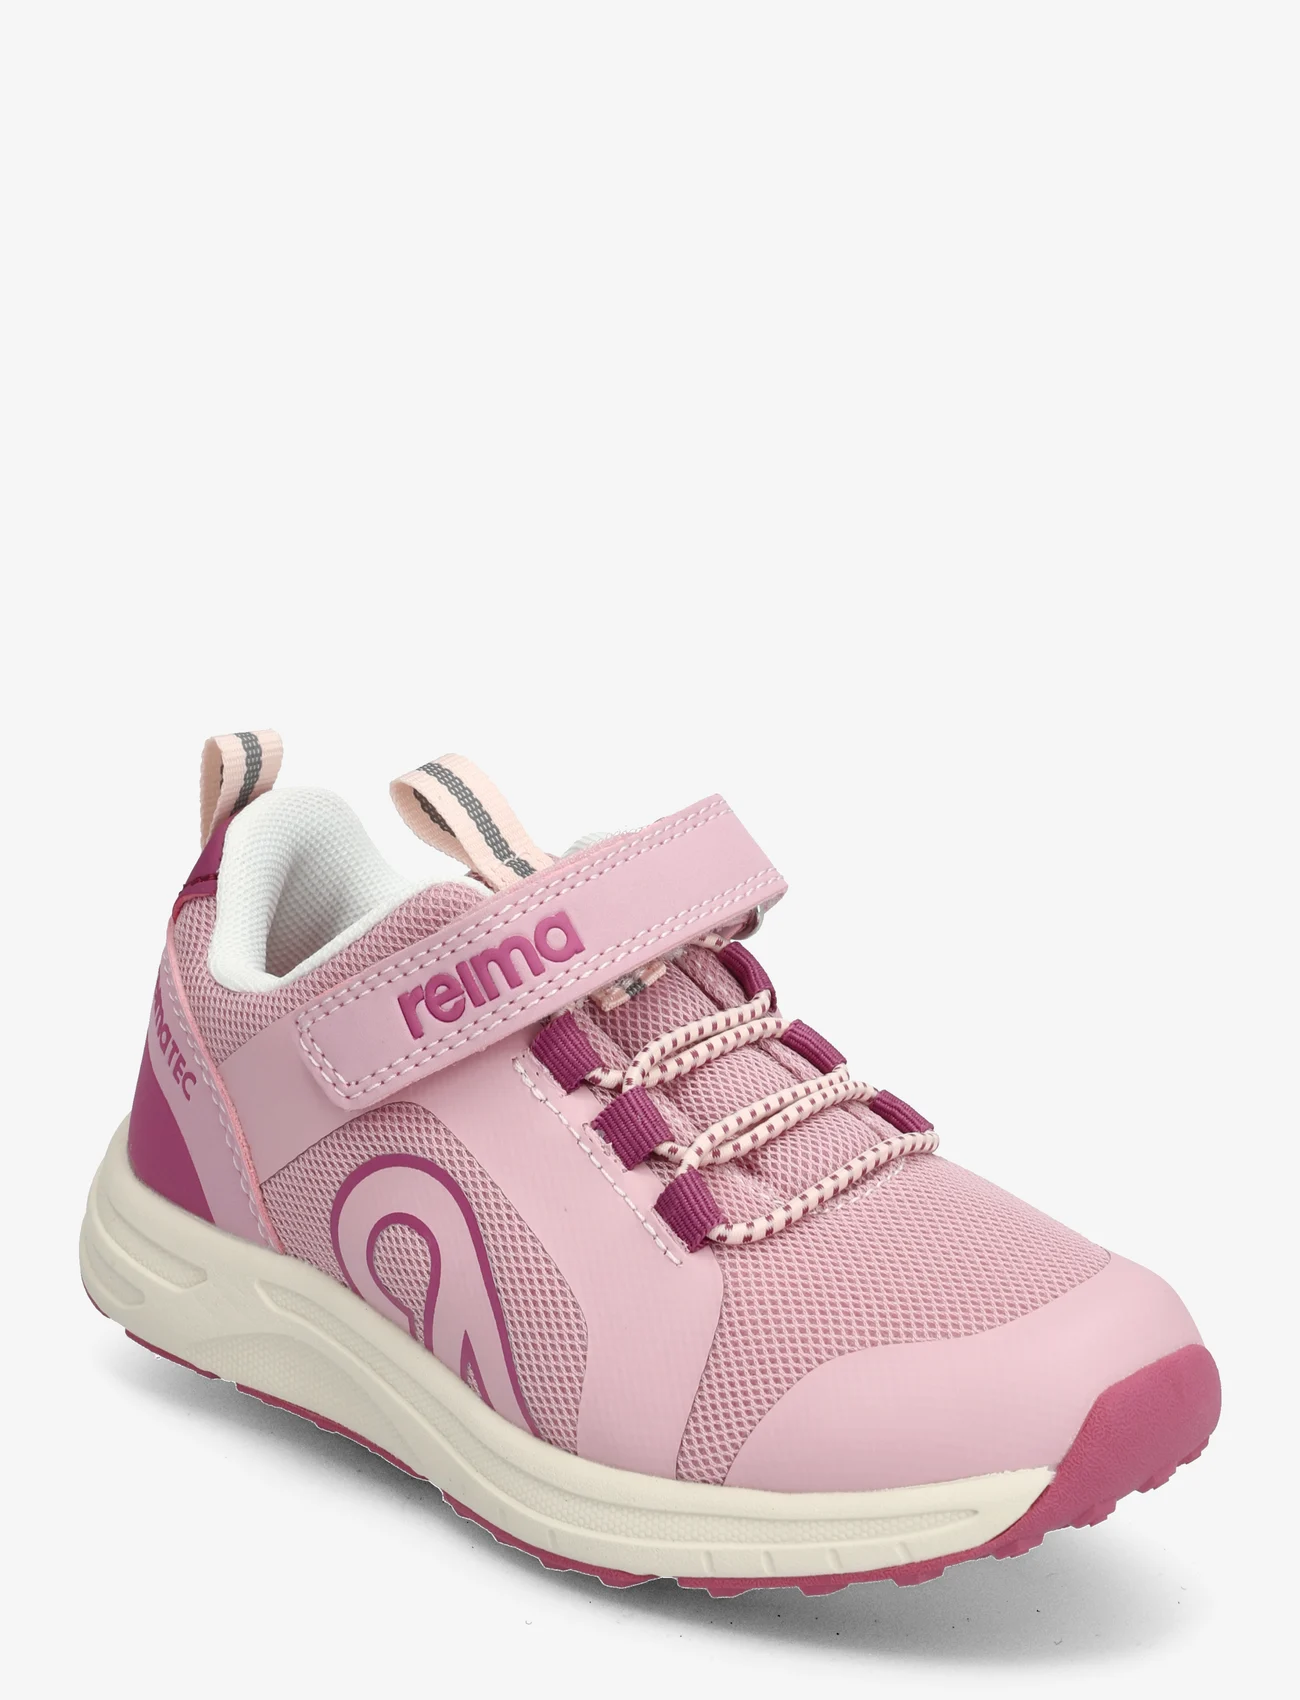 Reima - Reimatec shoes, Enkka - lapset - grey pink - 0